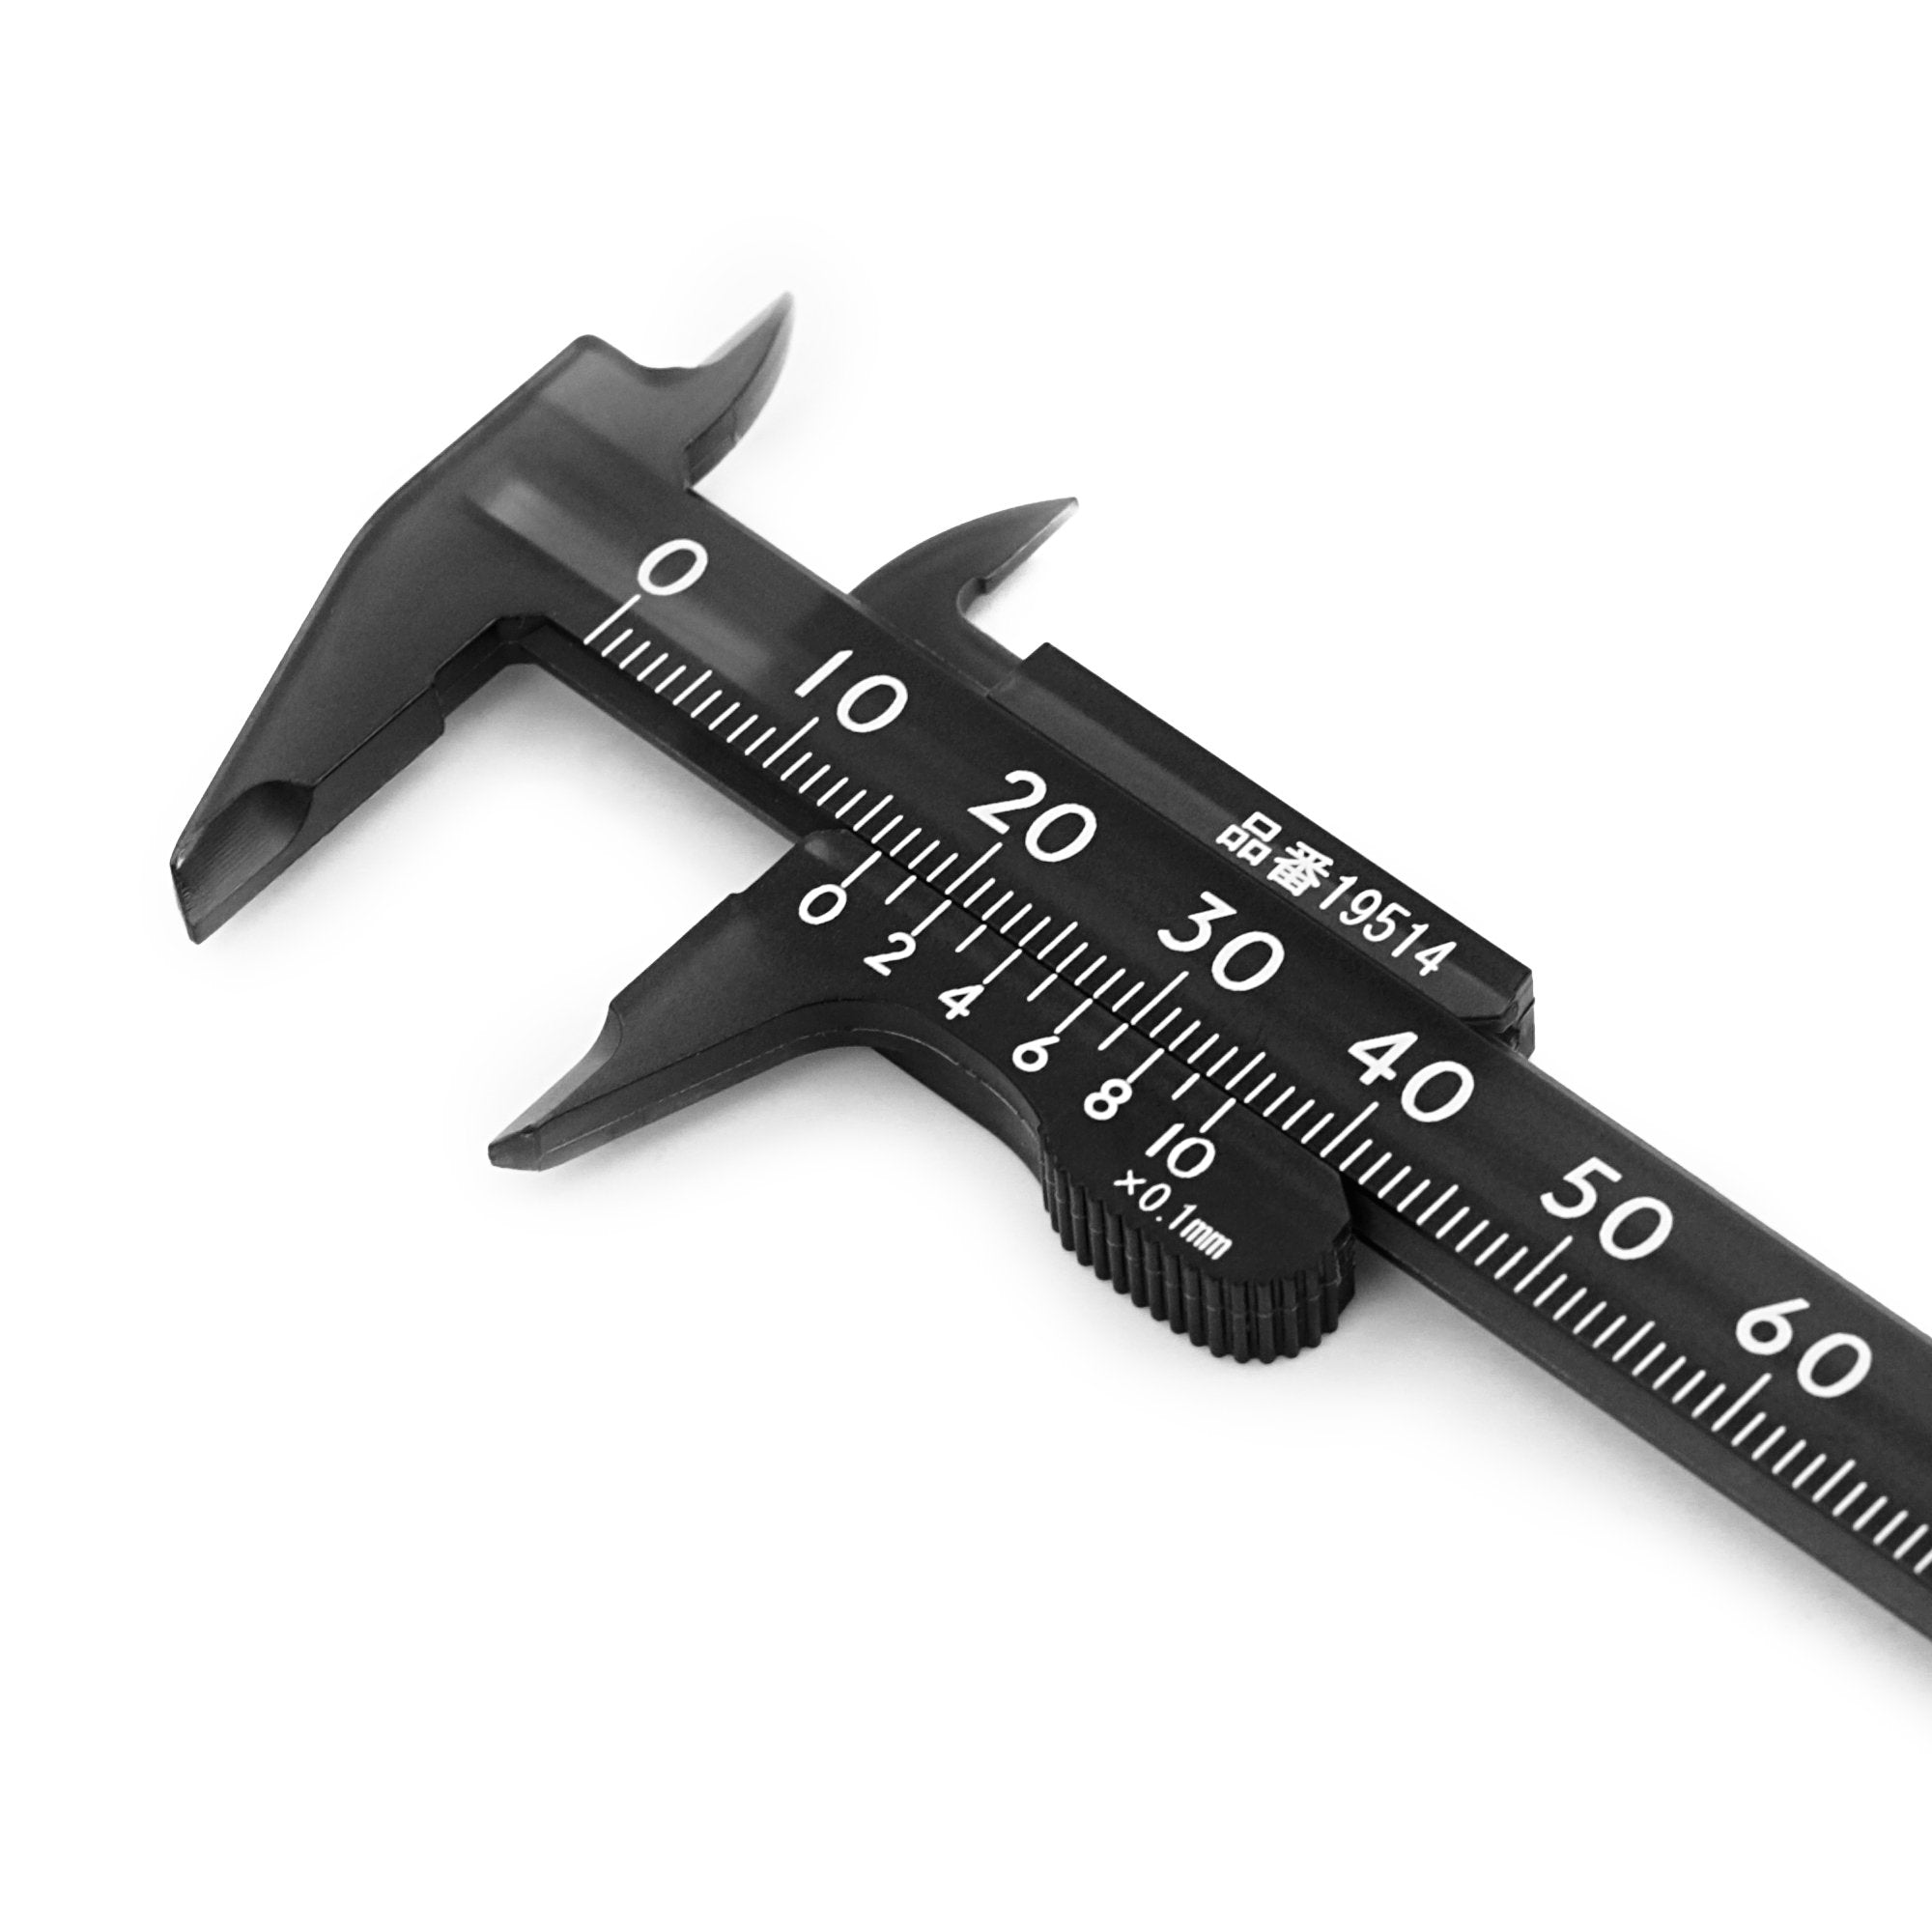 Mini Pocket Vernier Caliper, a Watch Measuring Tool Strapcode Watch Bands